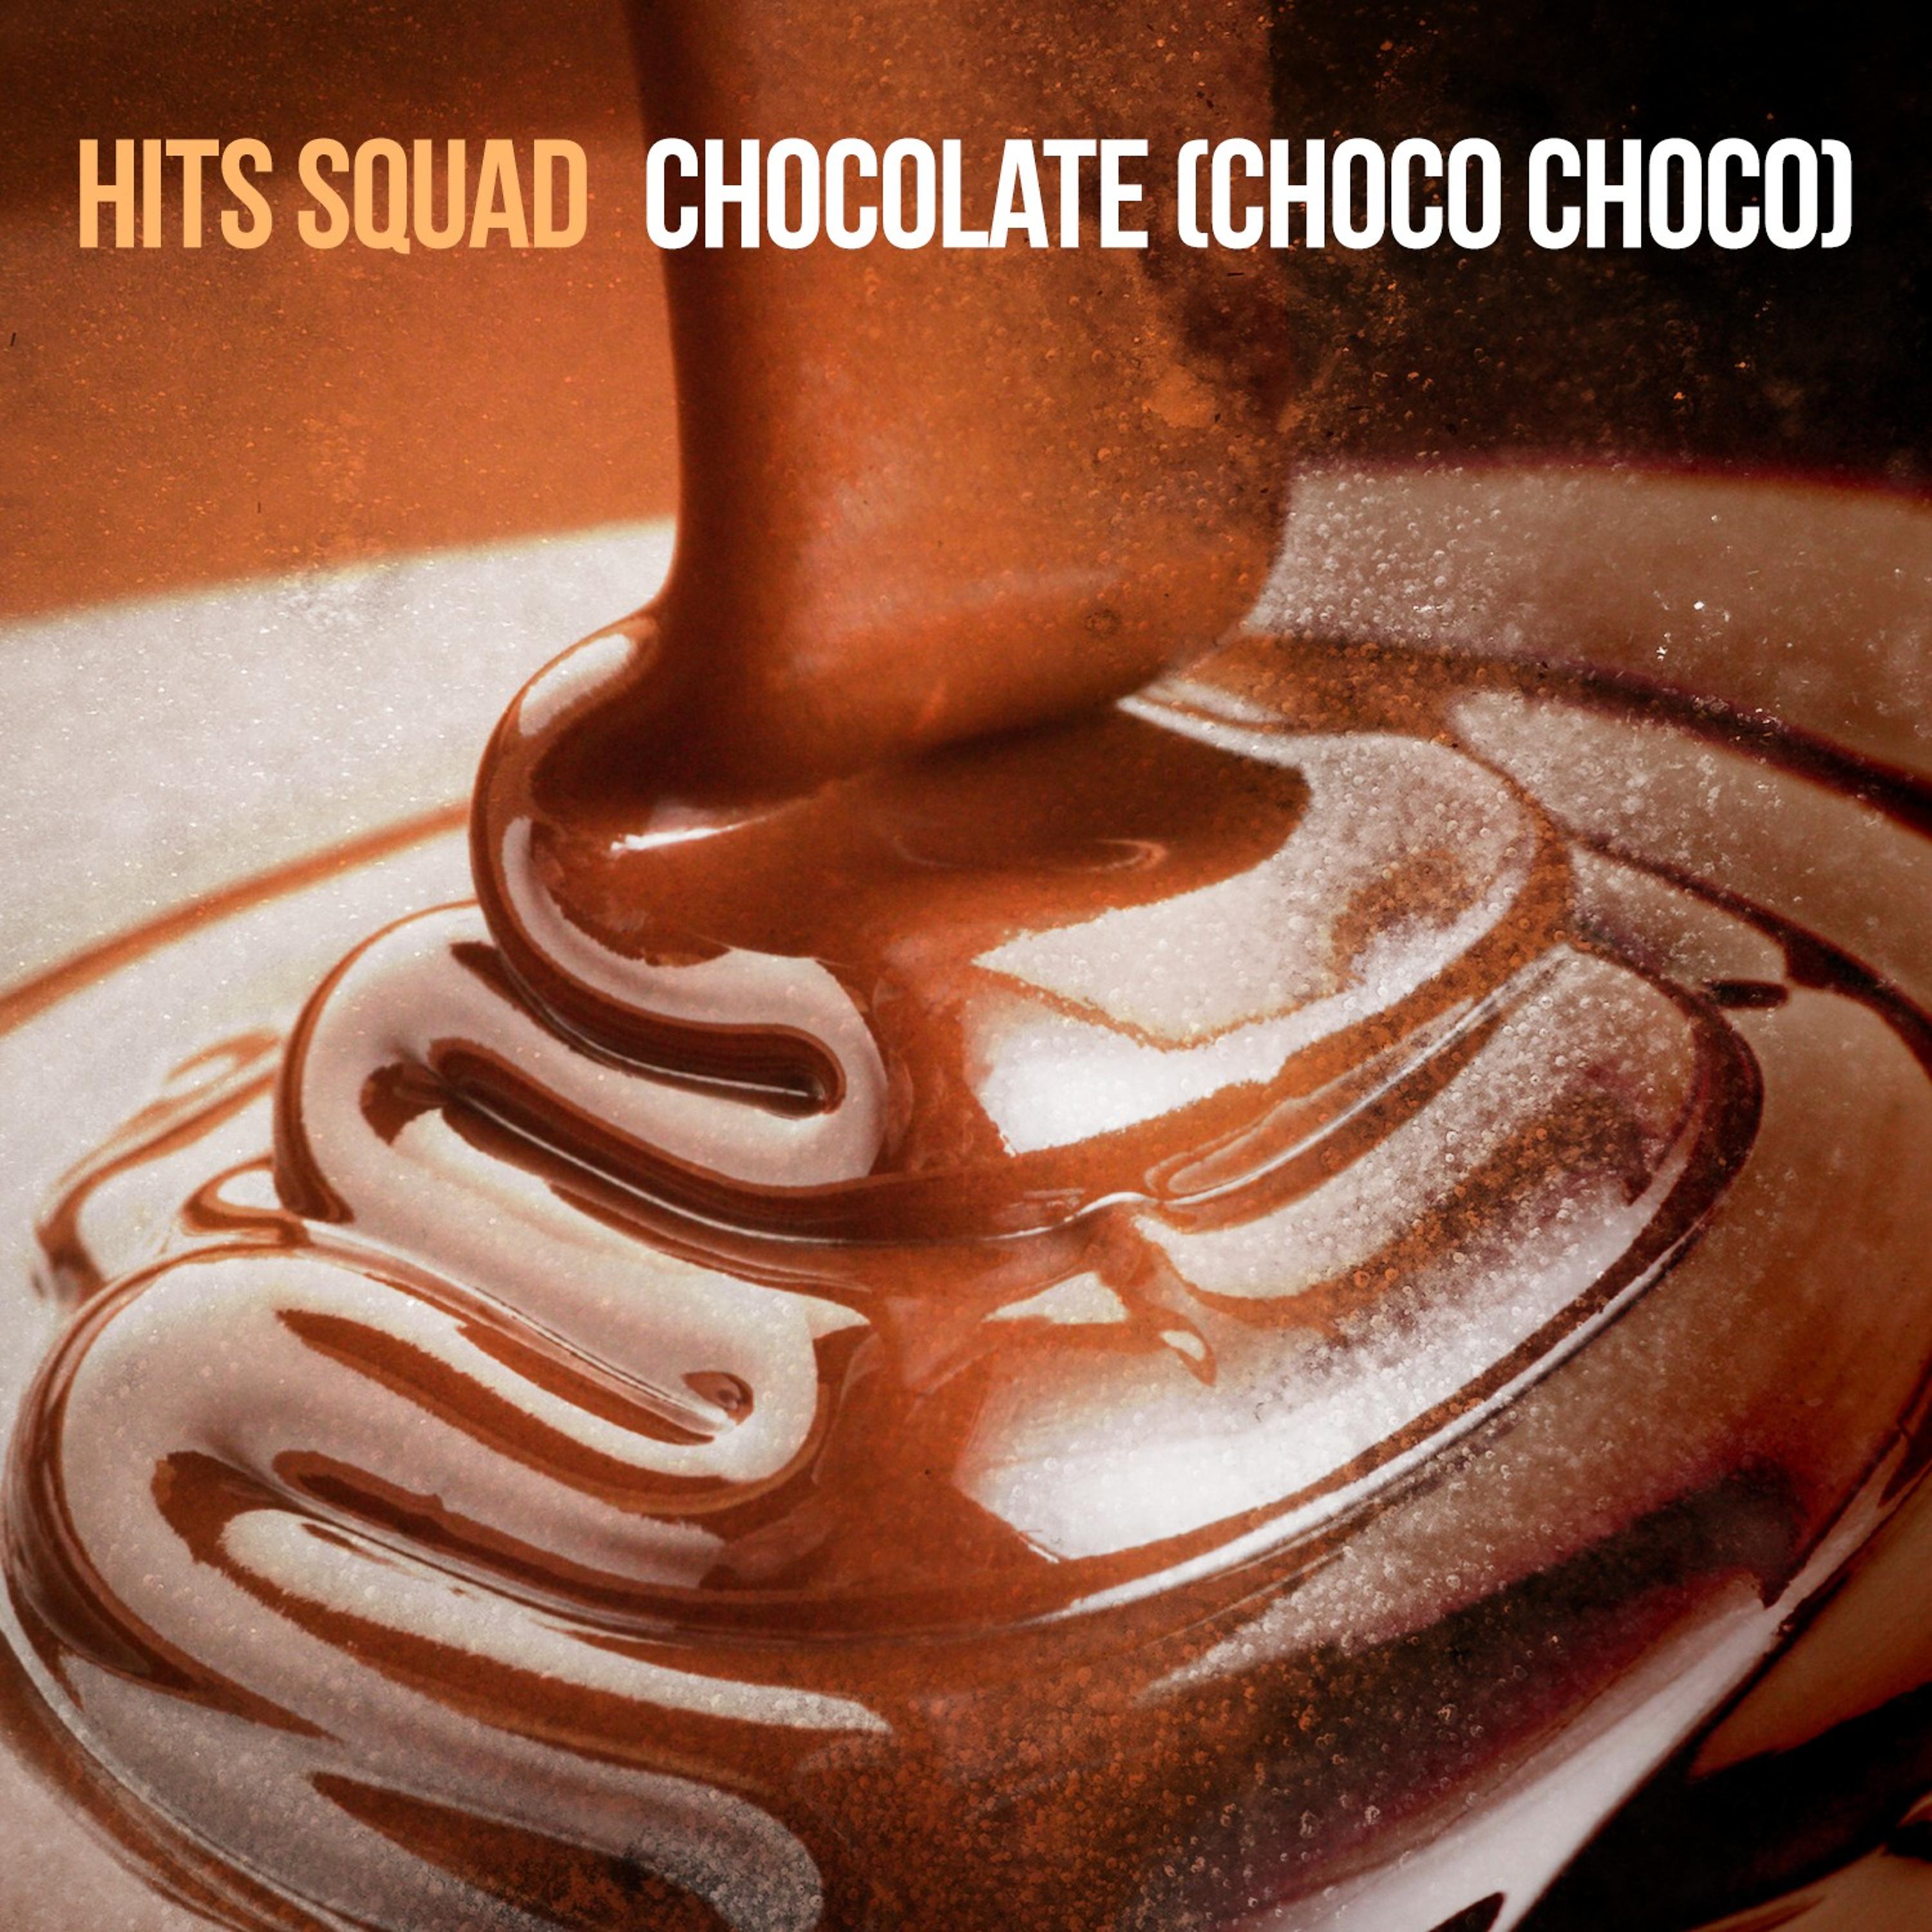 Чок чоко чоколате. Шоколад шоко. Чоколате а Чоко Чоко чоколате. Шоколадная пластинка. Чоко Чоко чоколате песня.